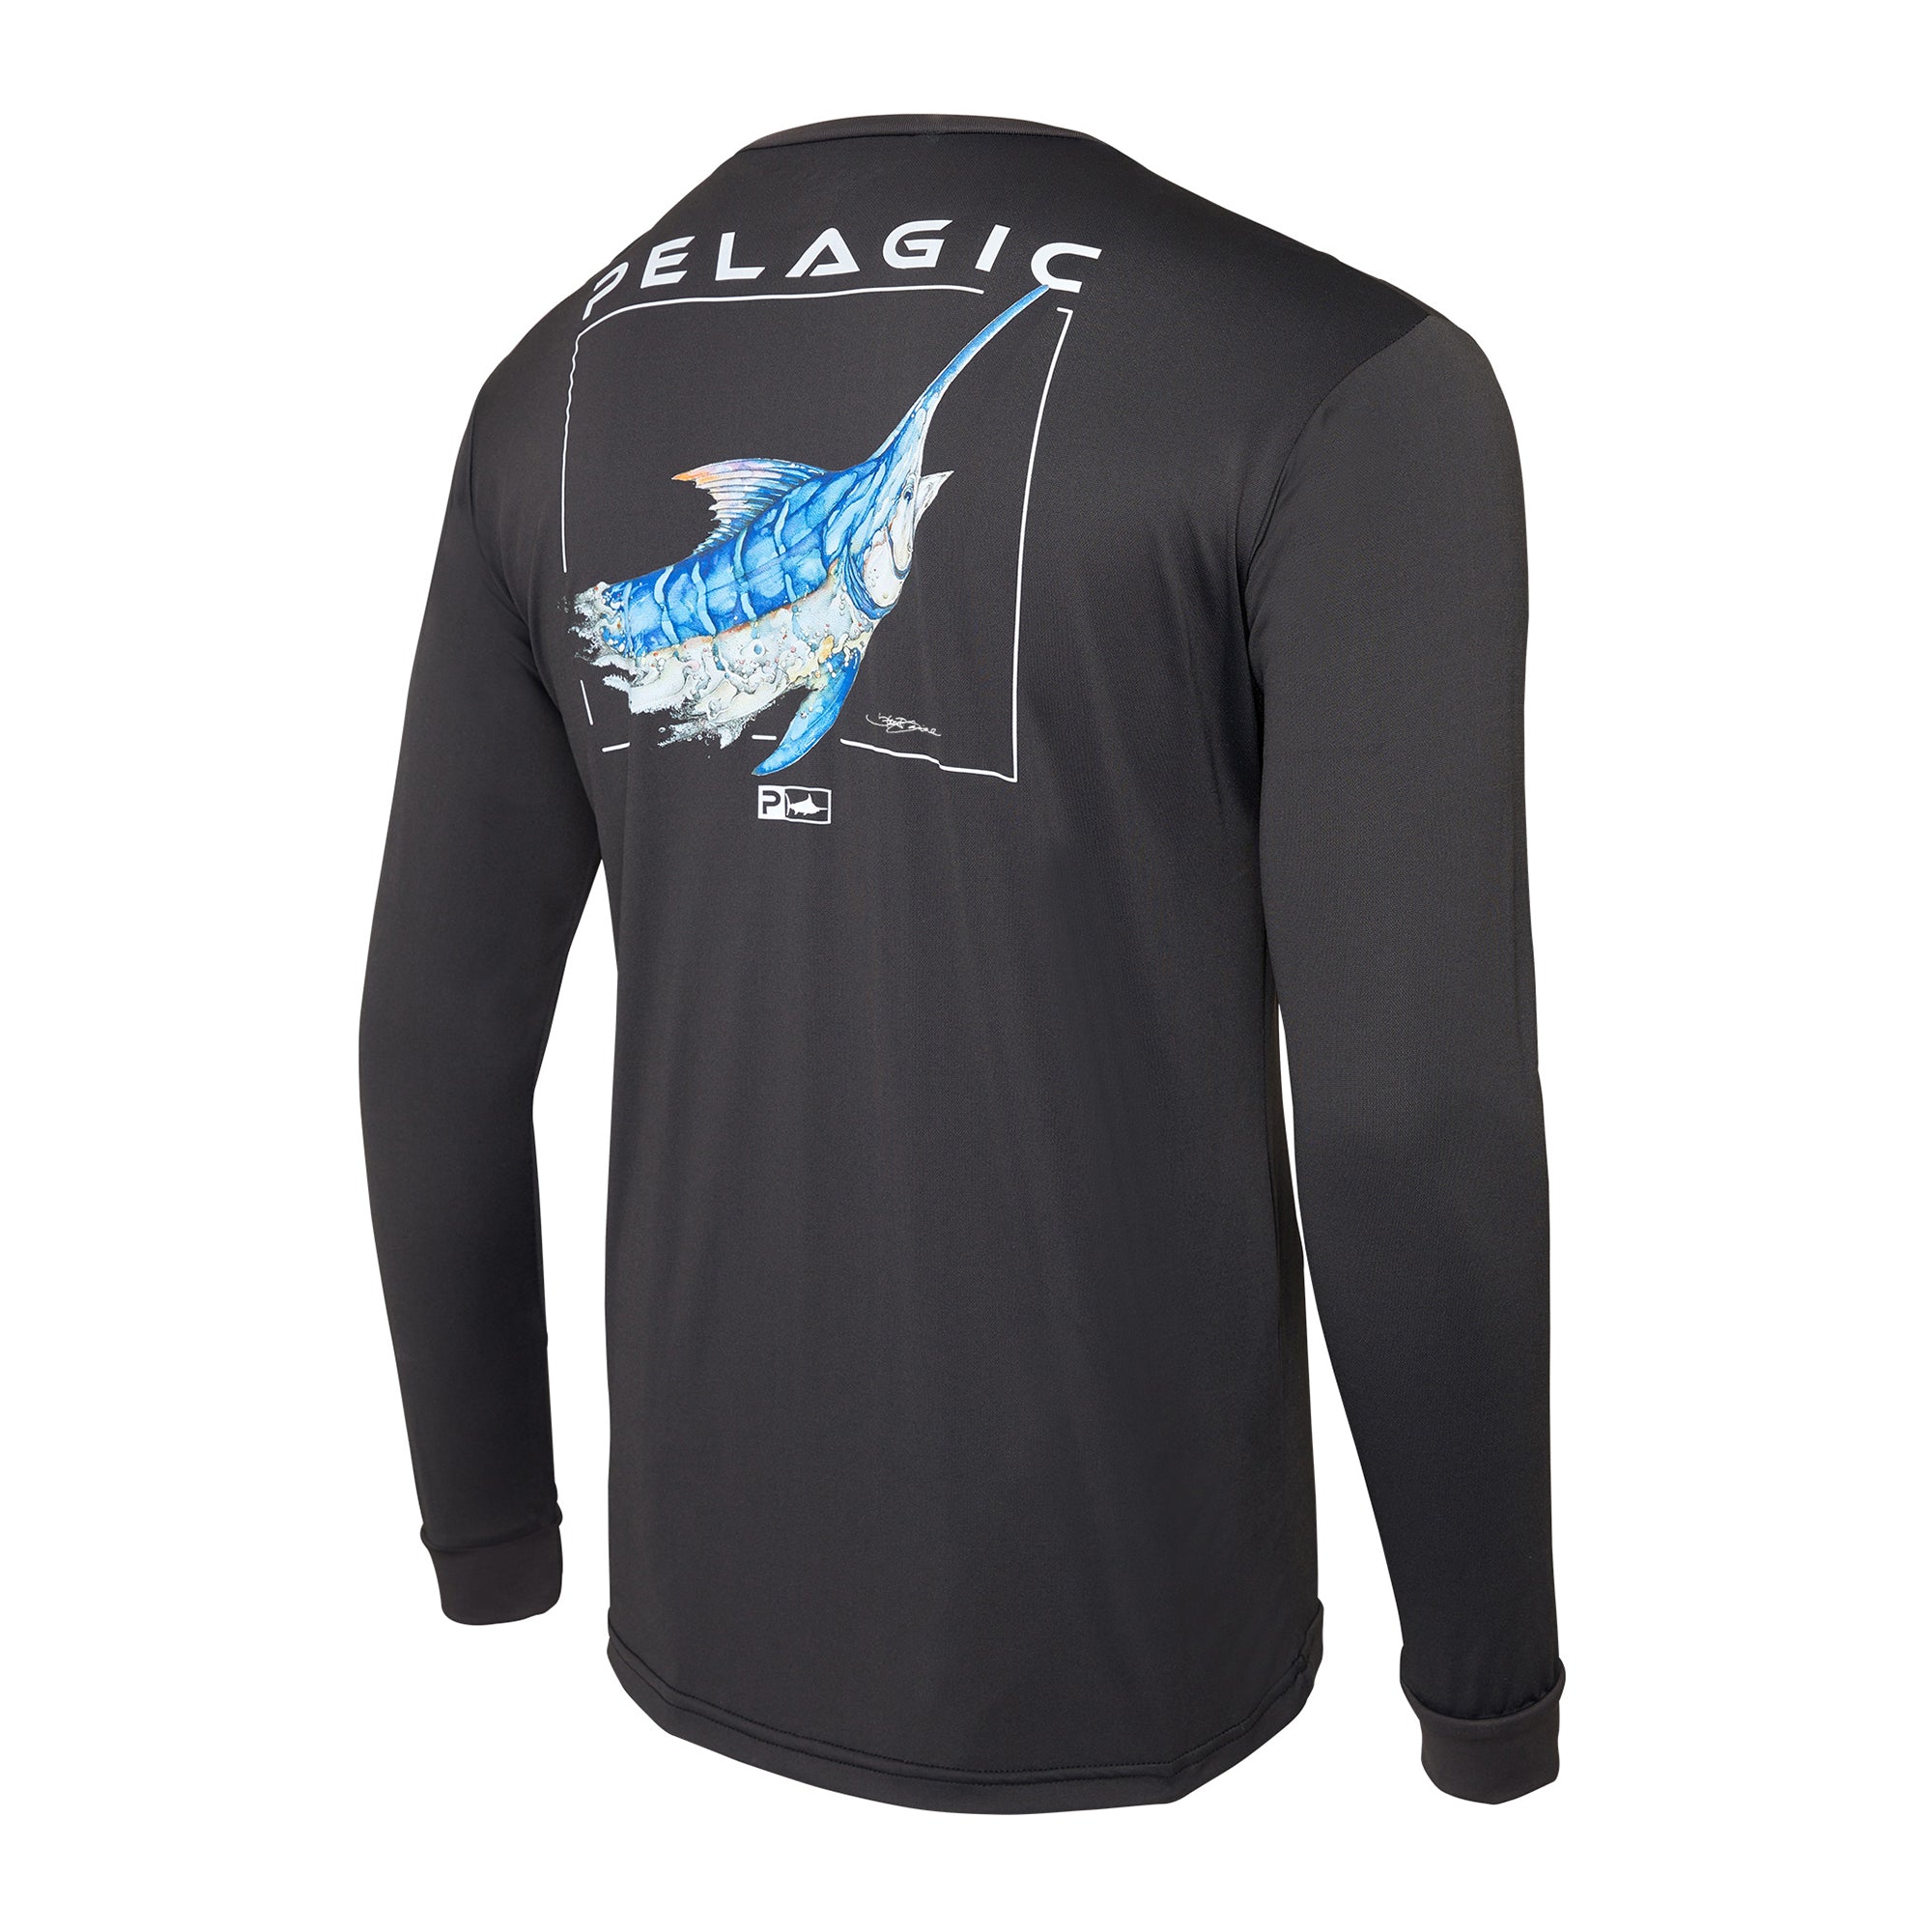 Pelagic Aquatek Goione Marlin Long-Sleeve Shirt for Men - Black